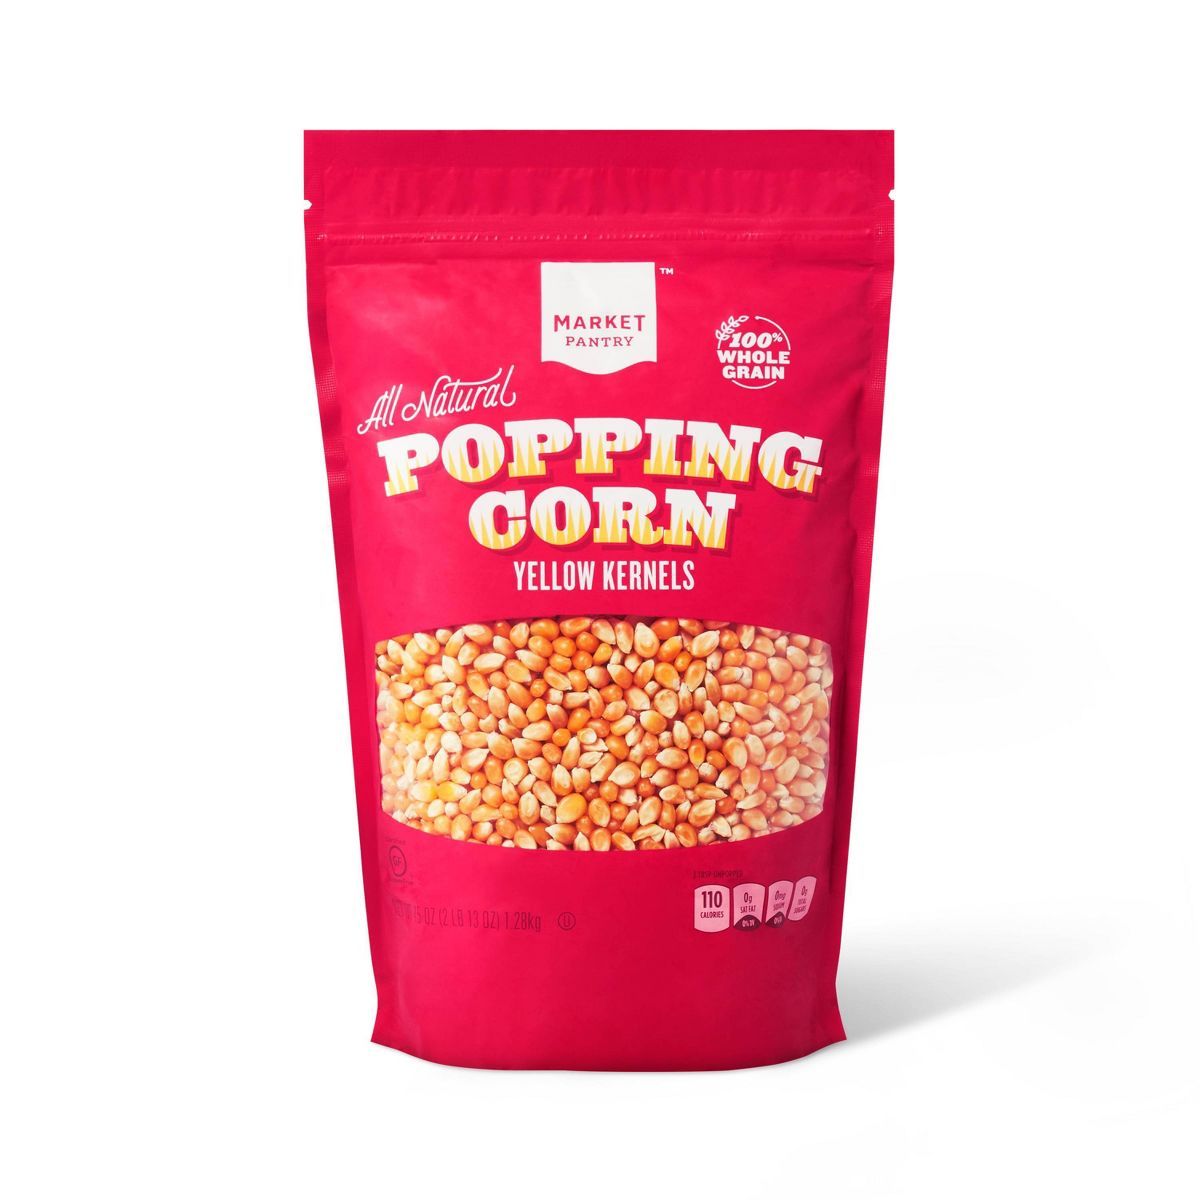 All Natural Popping Corn Yellow Kernels - 45oz - Market Pantry™ | Target